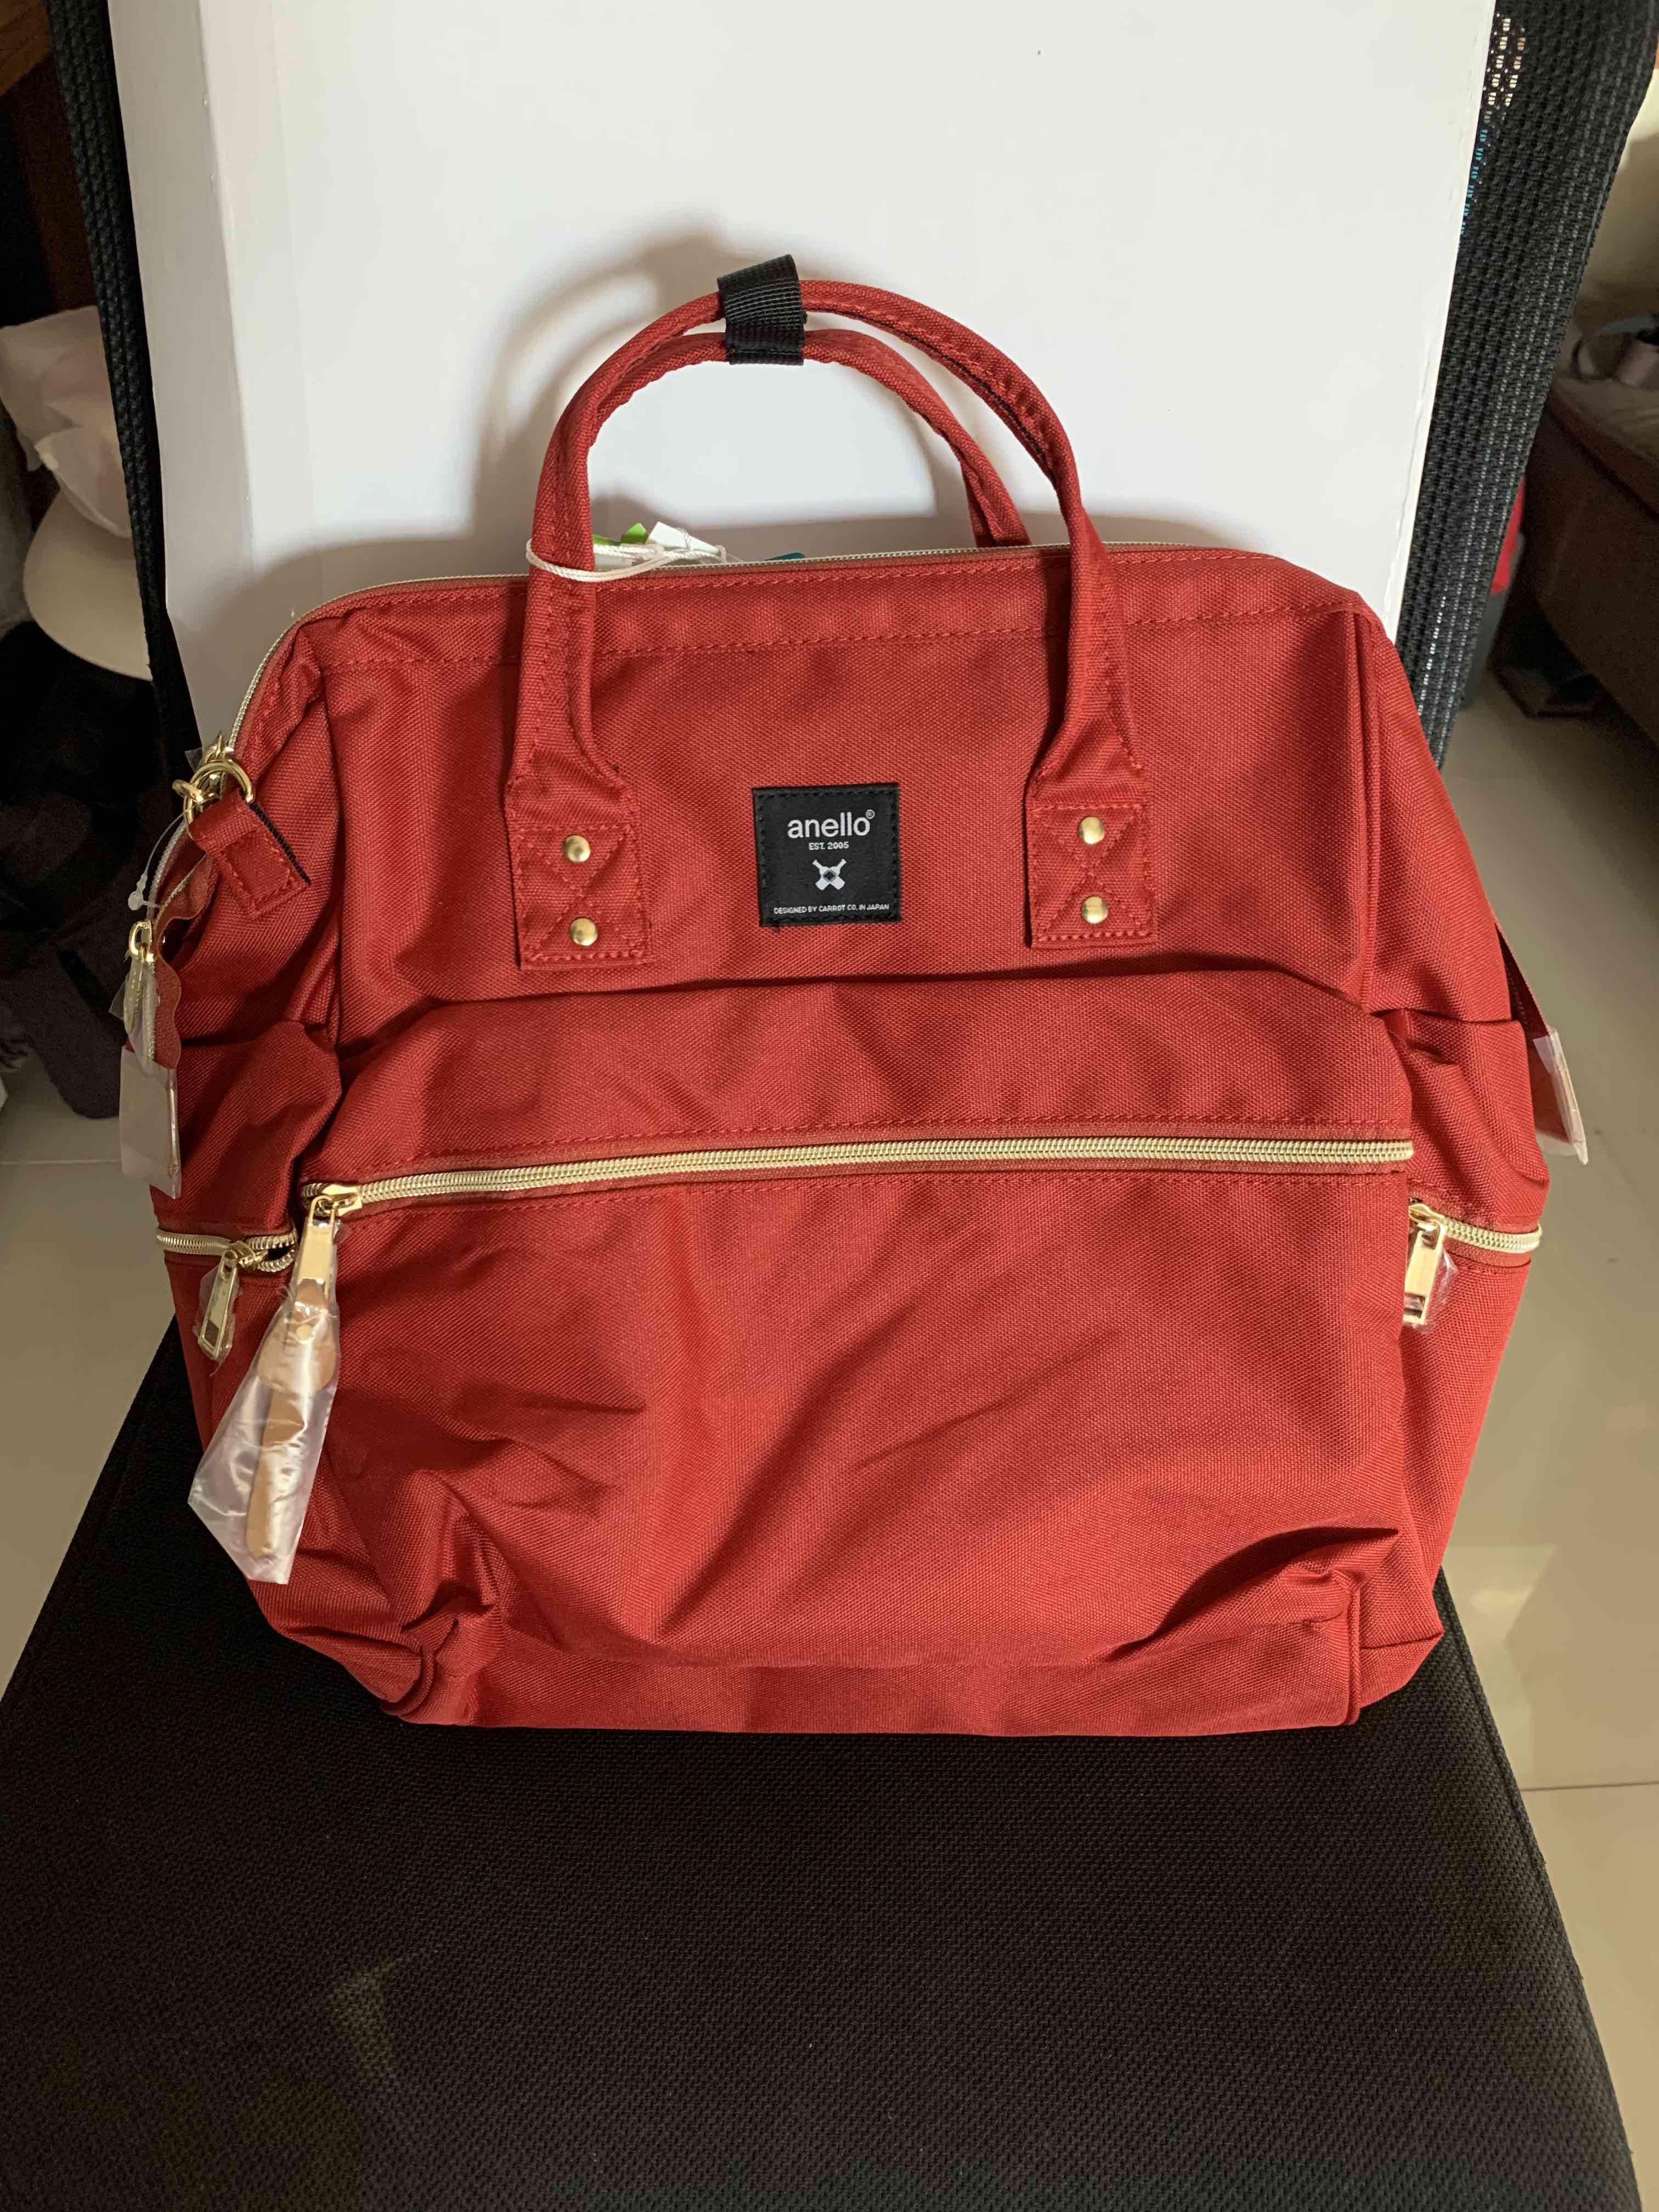 Preowned Boston anello shoulder bag (wine red)